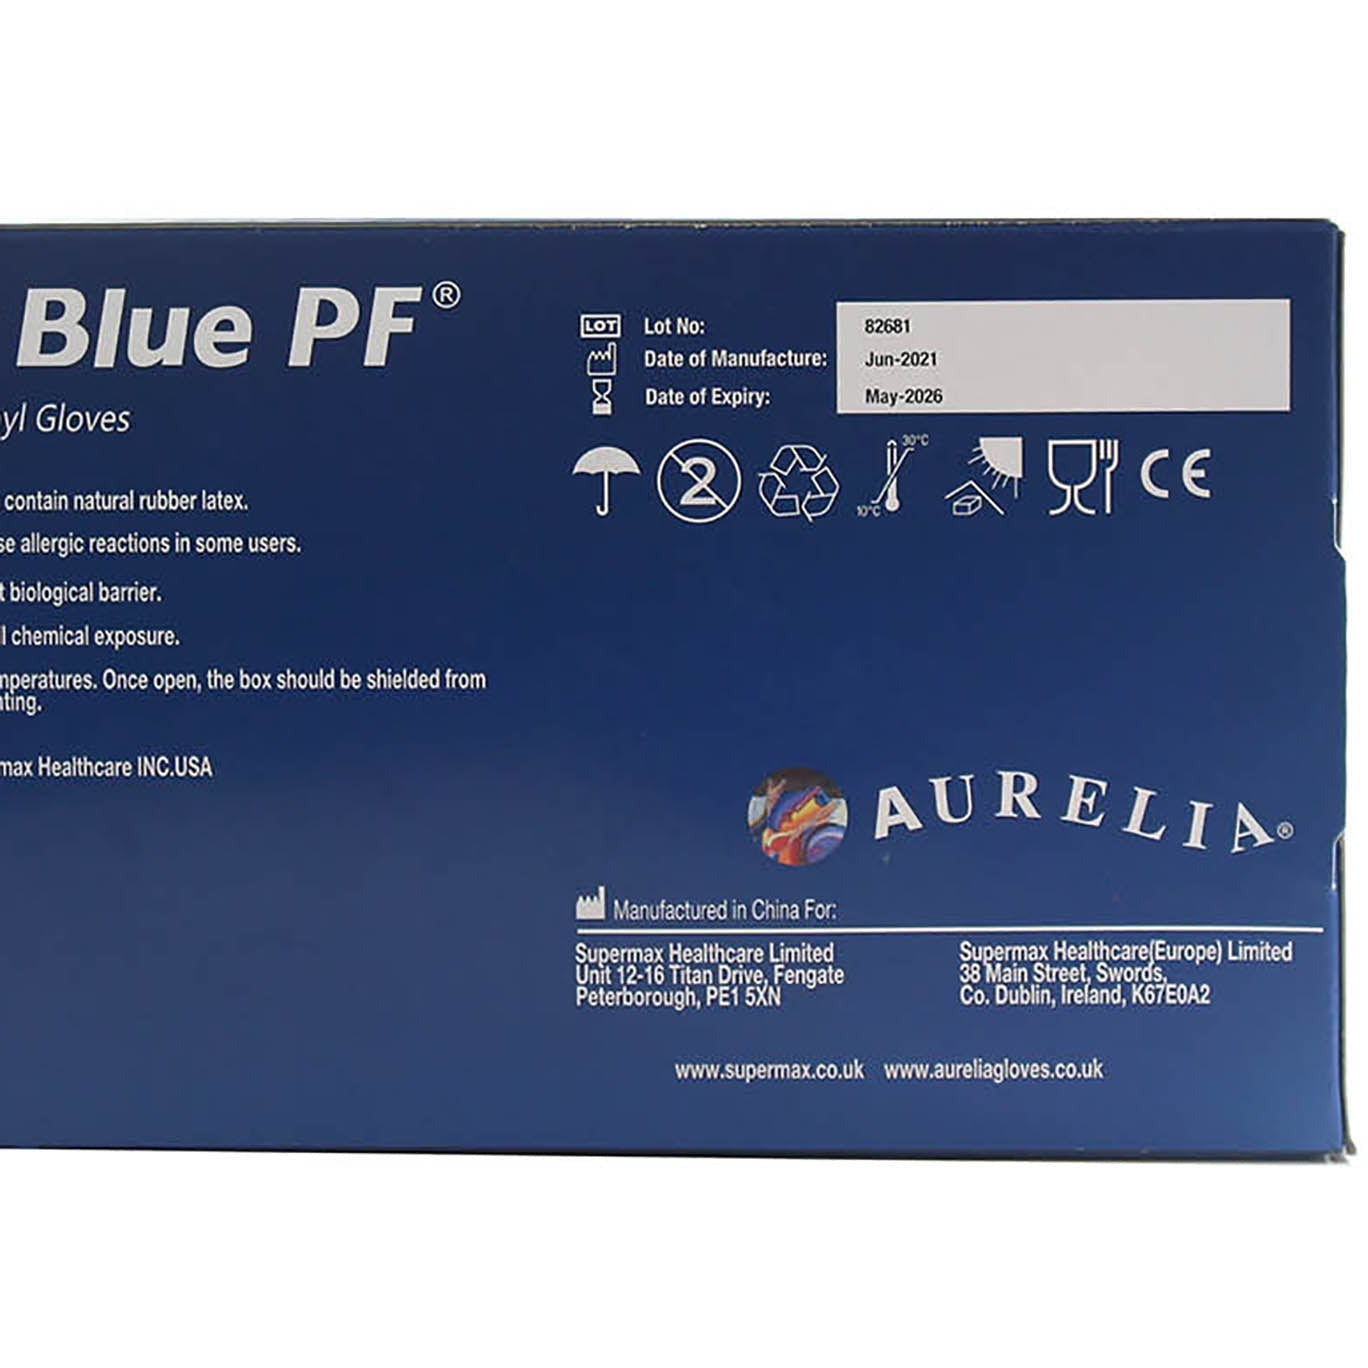 Aurelia Delight Blue PF Vinyl Powder free examination gloves M (Box of 100)